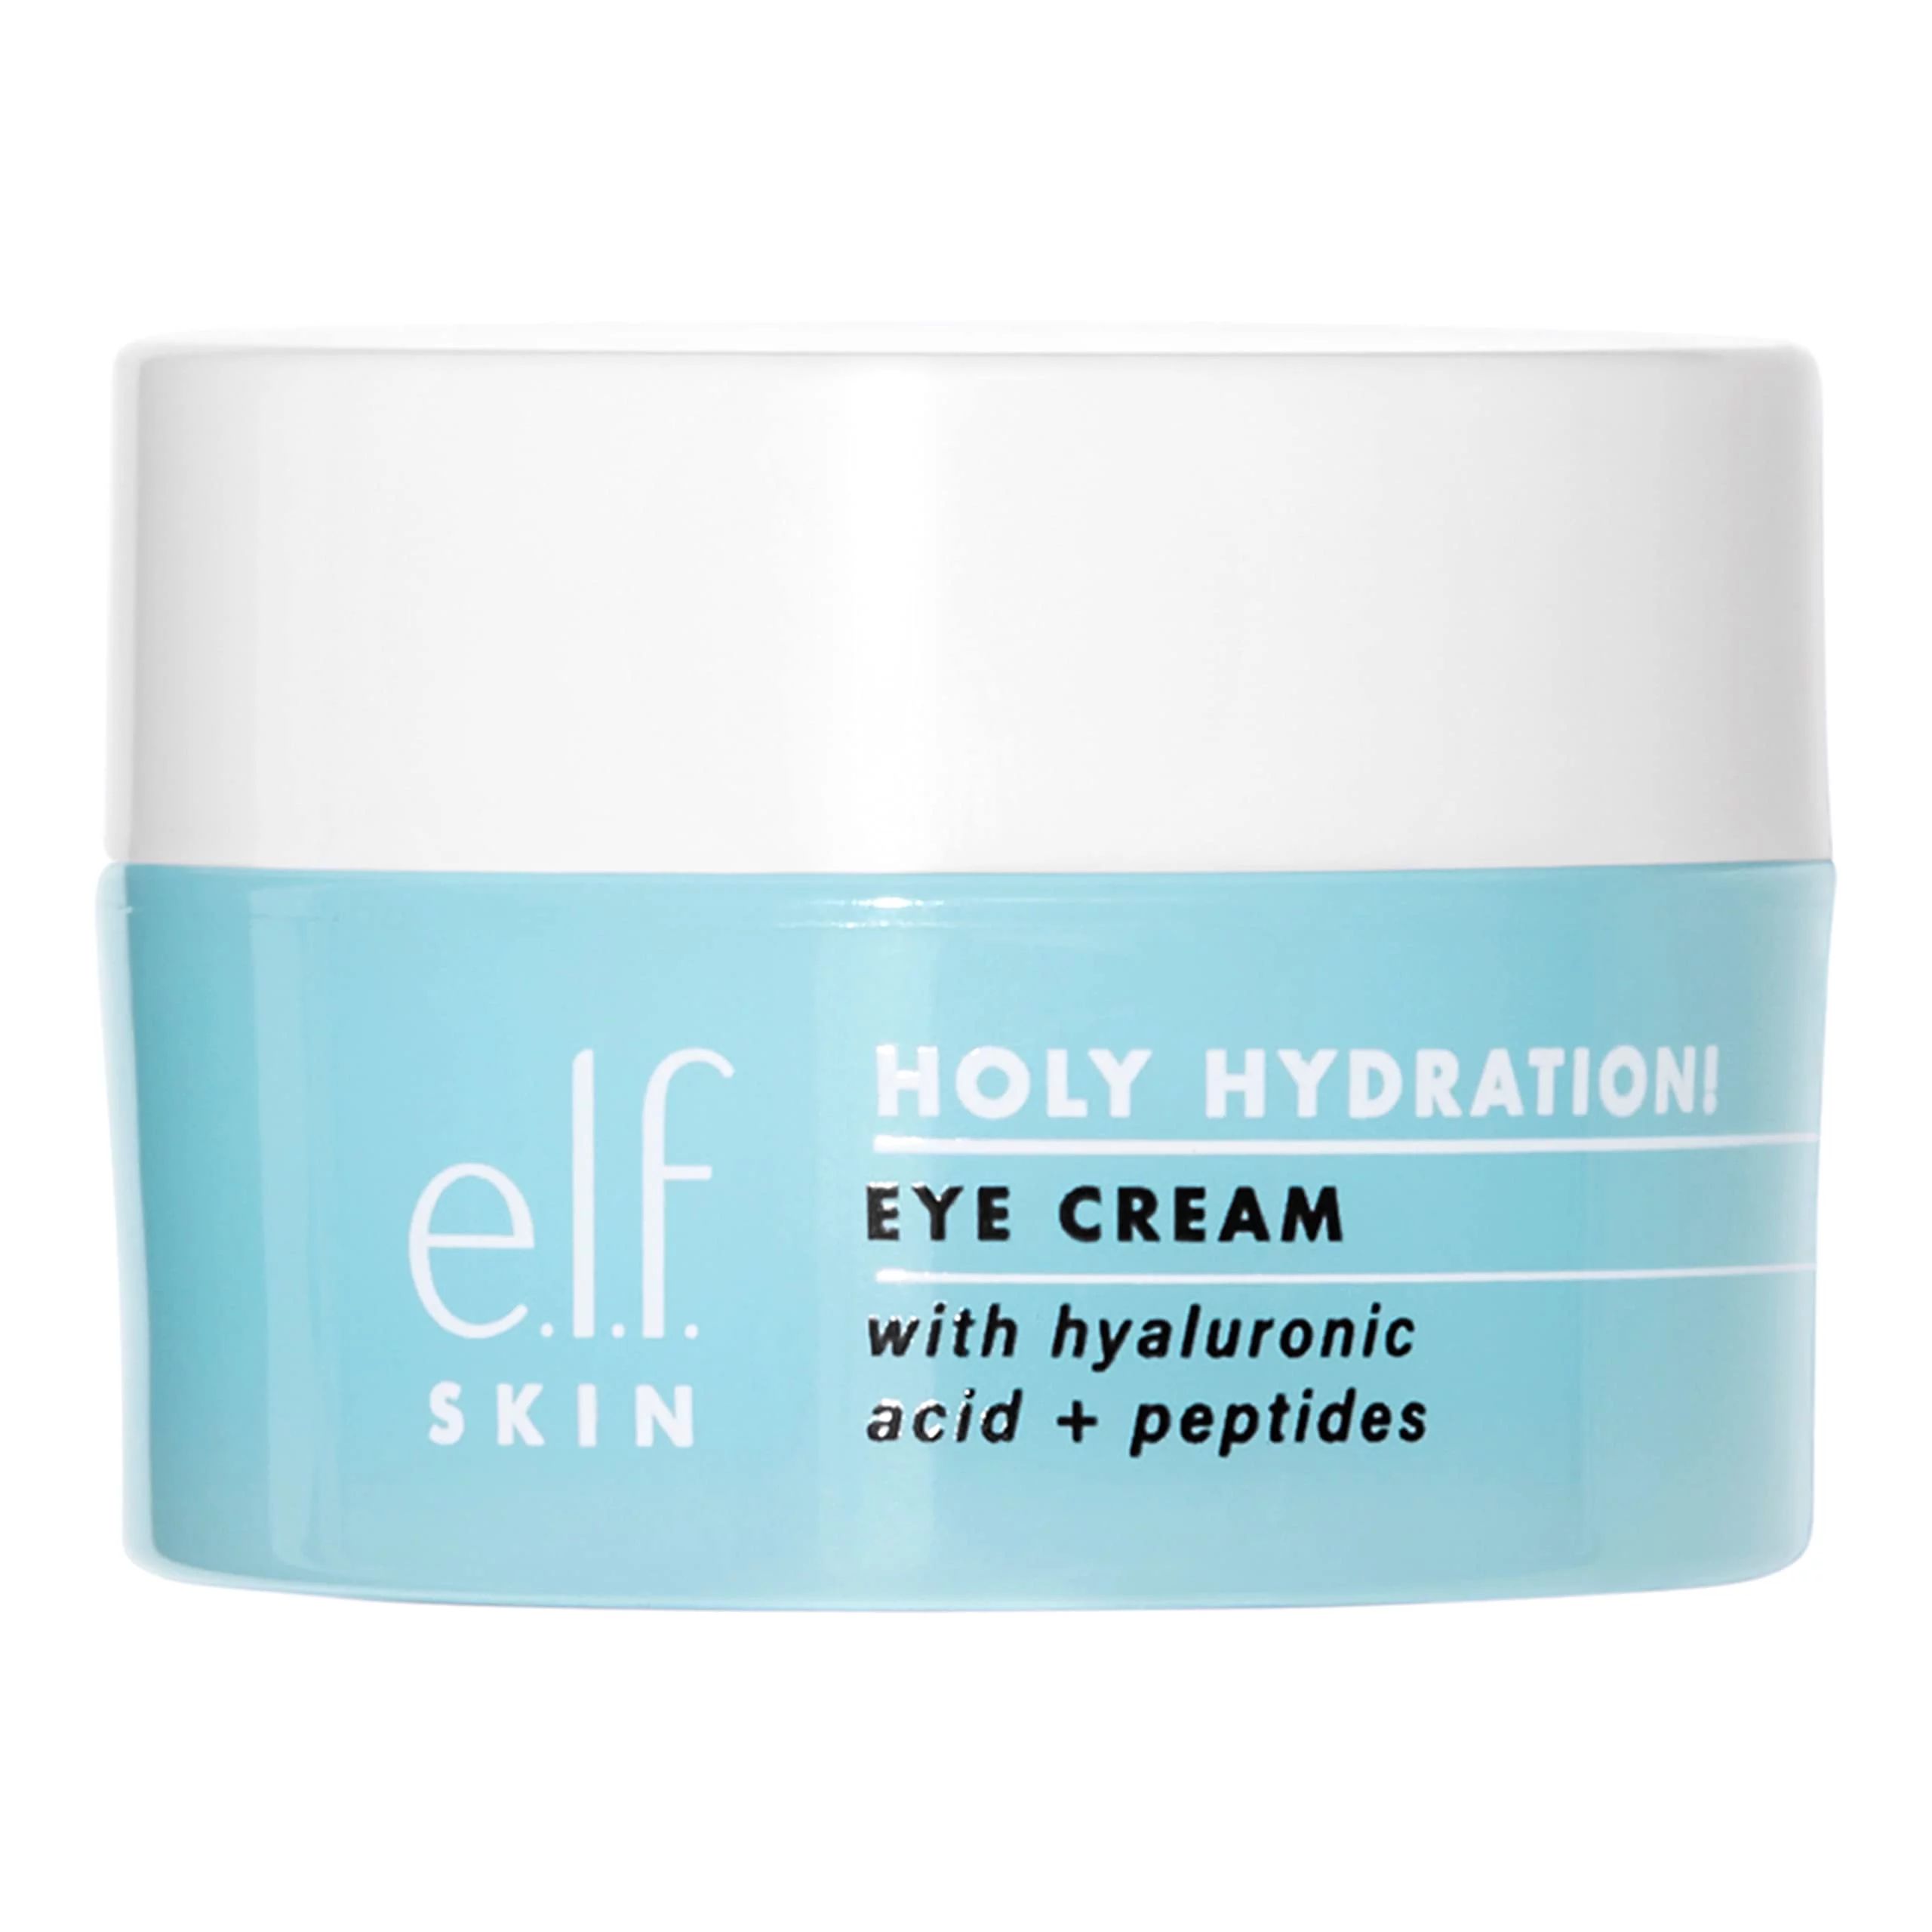 E.L.F. Skin Holy Hydration! Eye Cream, Brightening Cream For Minimizing Dark Circles, Infused Wit... | Walmart (US)